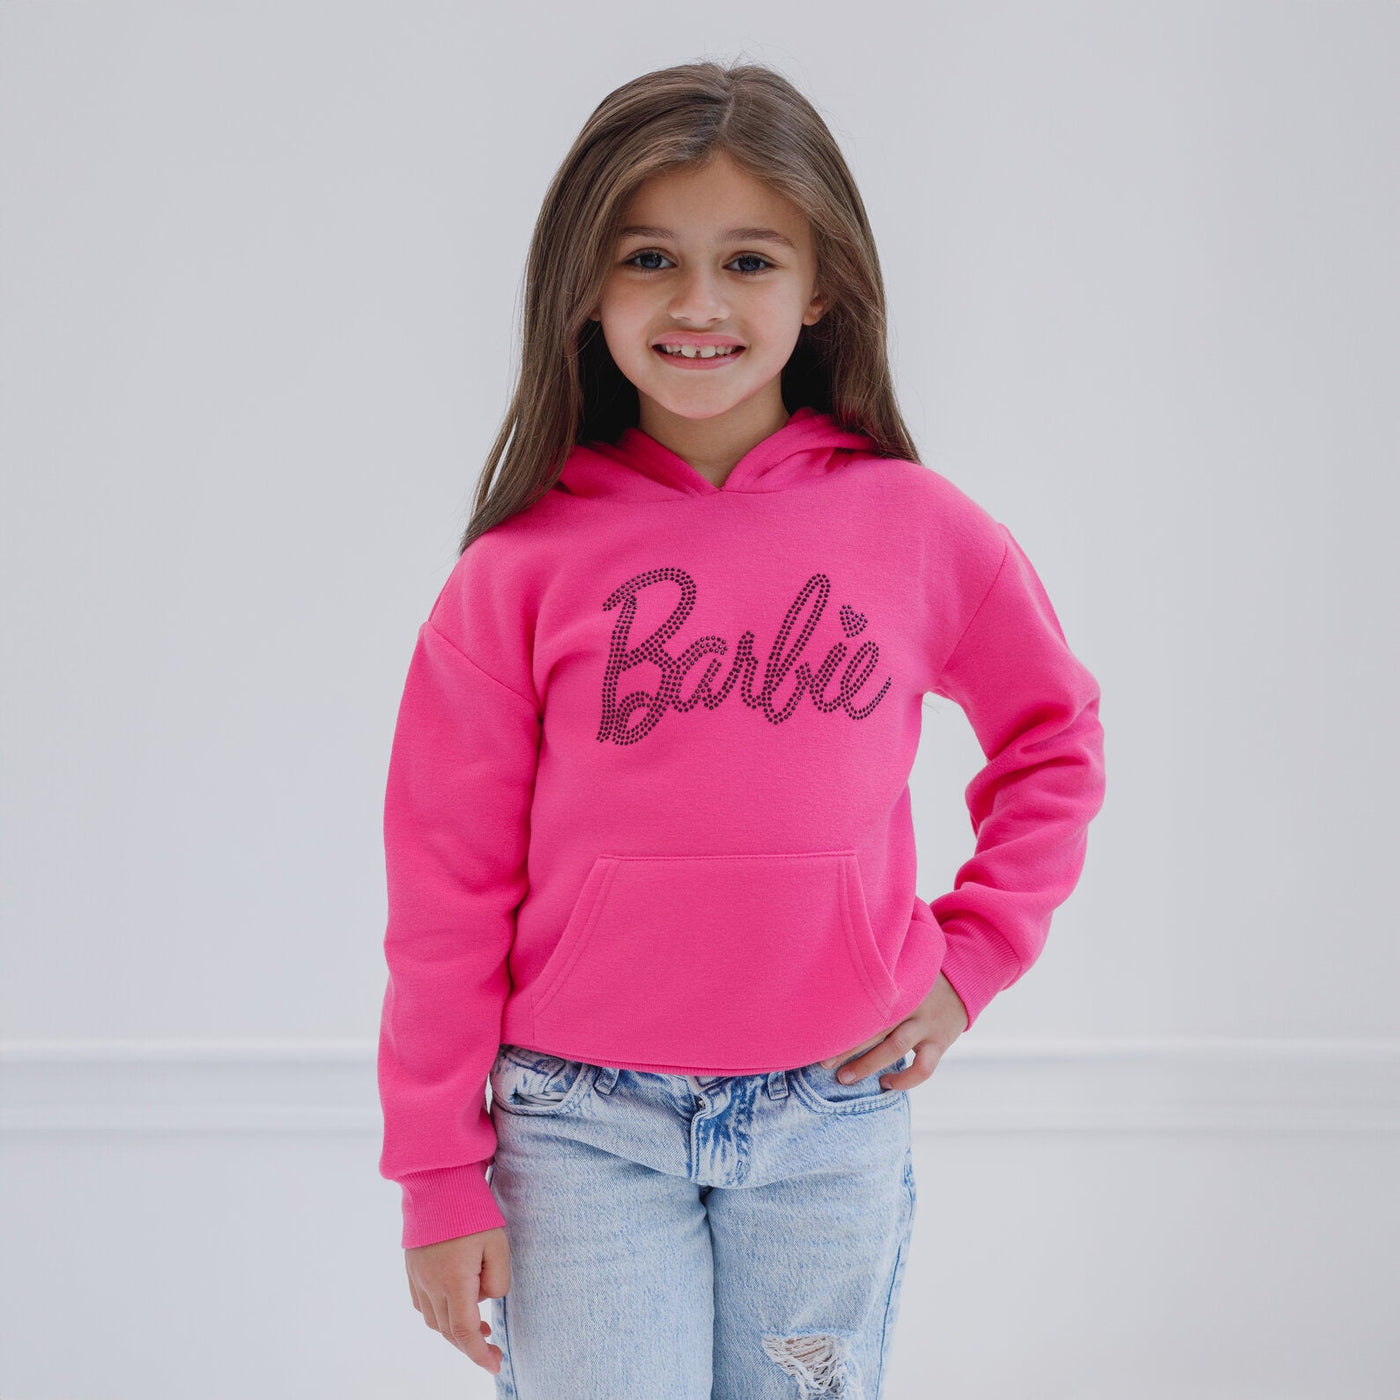 Barbie Fleece Pullover Hoodie - imagikids